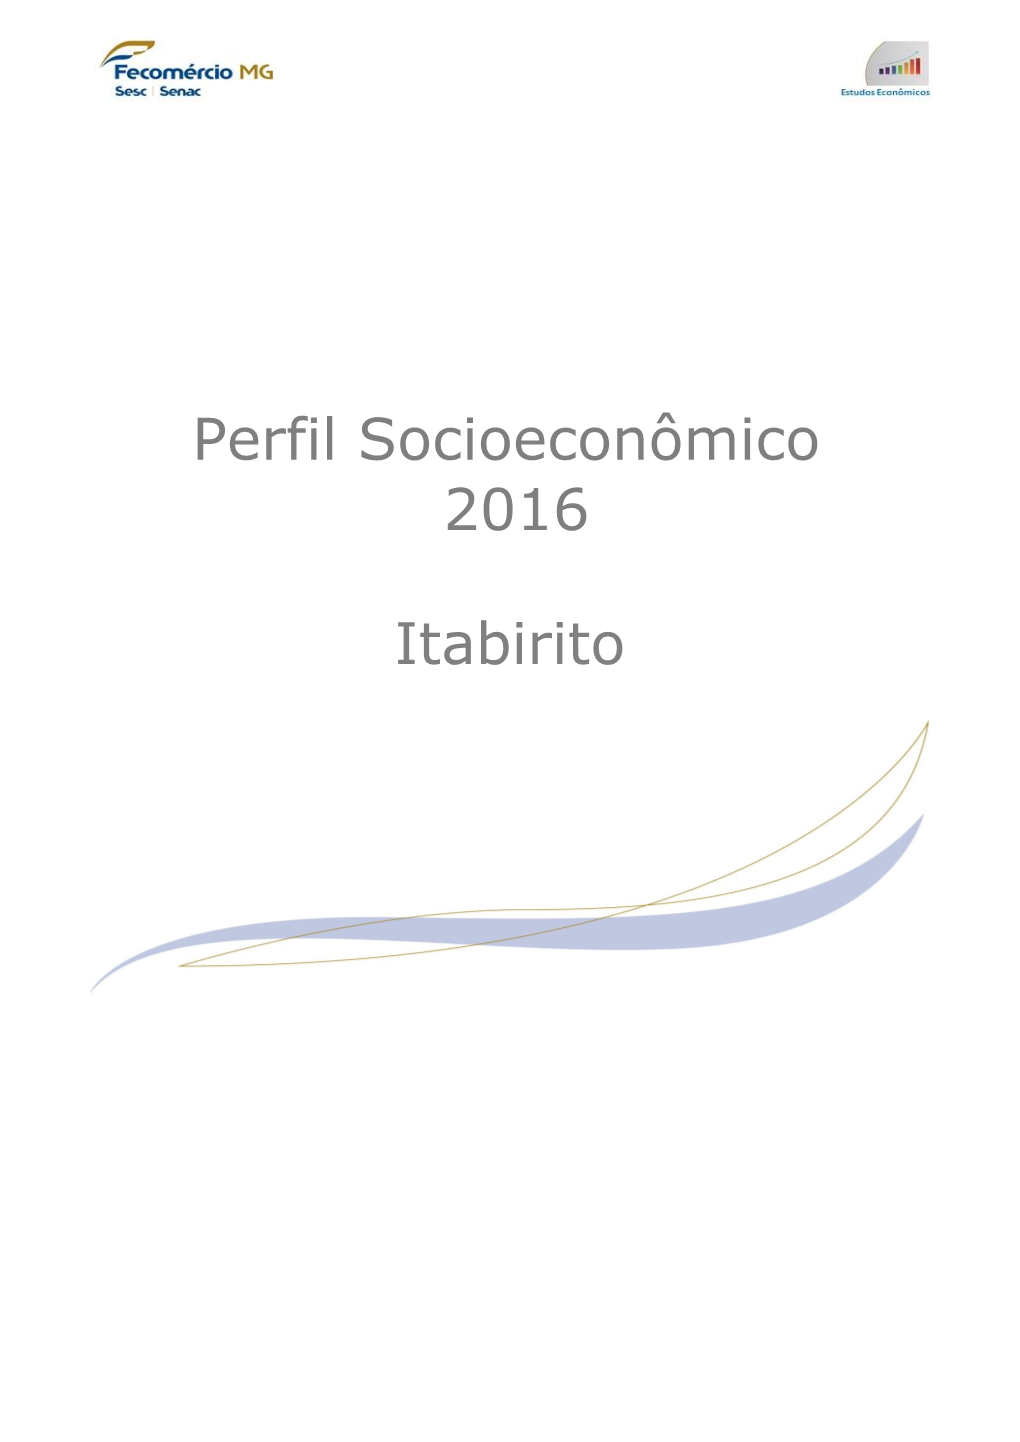 Itabirito Perfil Socioeconômico 2016